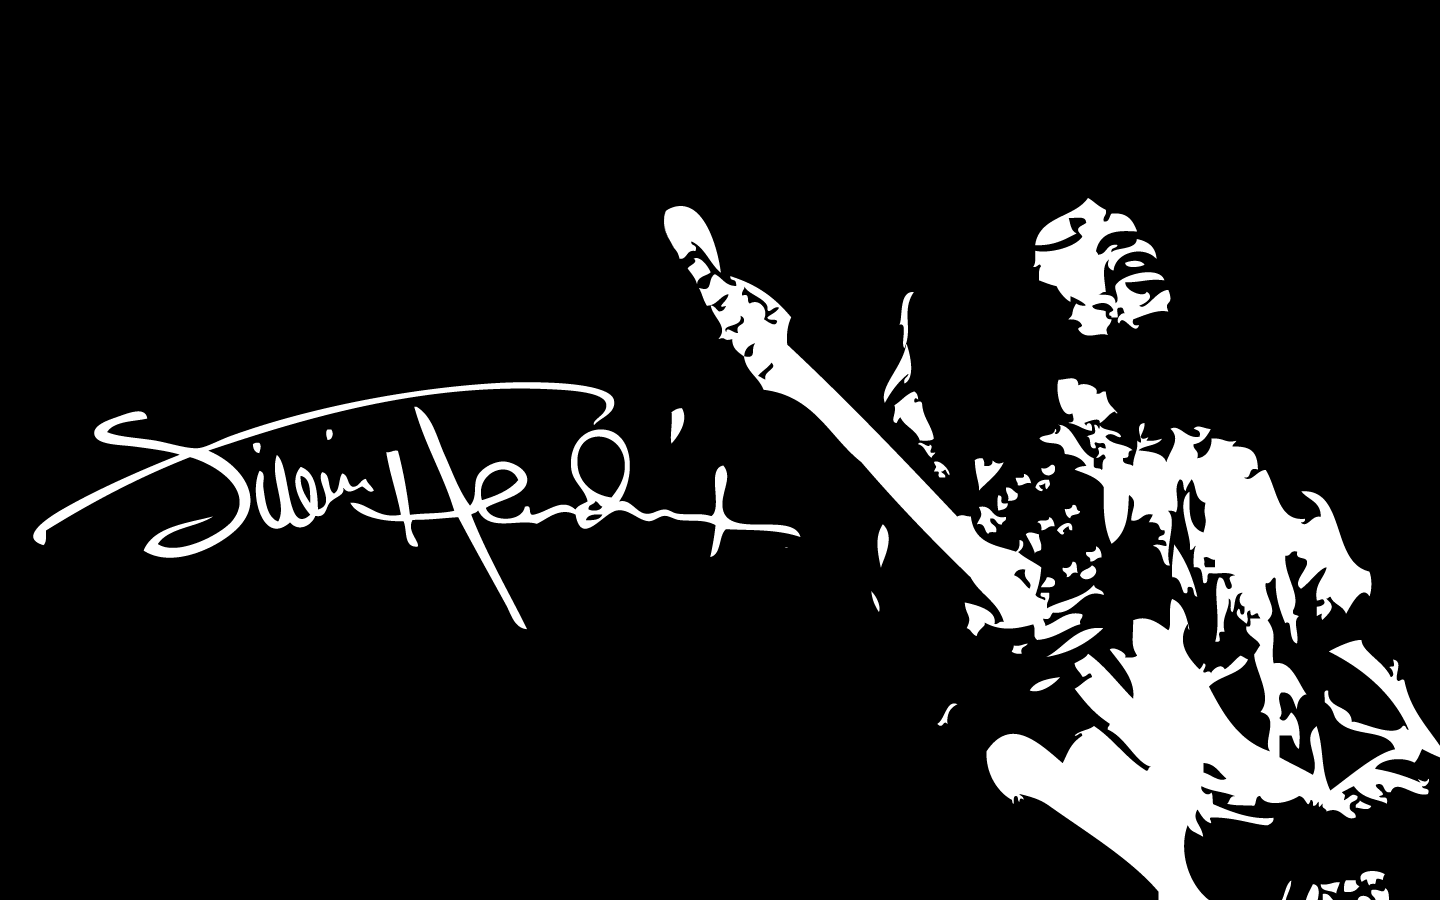 People 1440x900 men singer Jimi Hendrix guitar blues rock legends afro minimalism artwork monochrome signature white black background playing musician